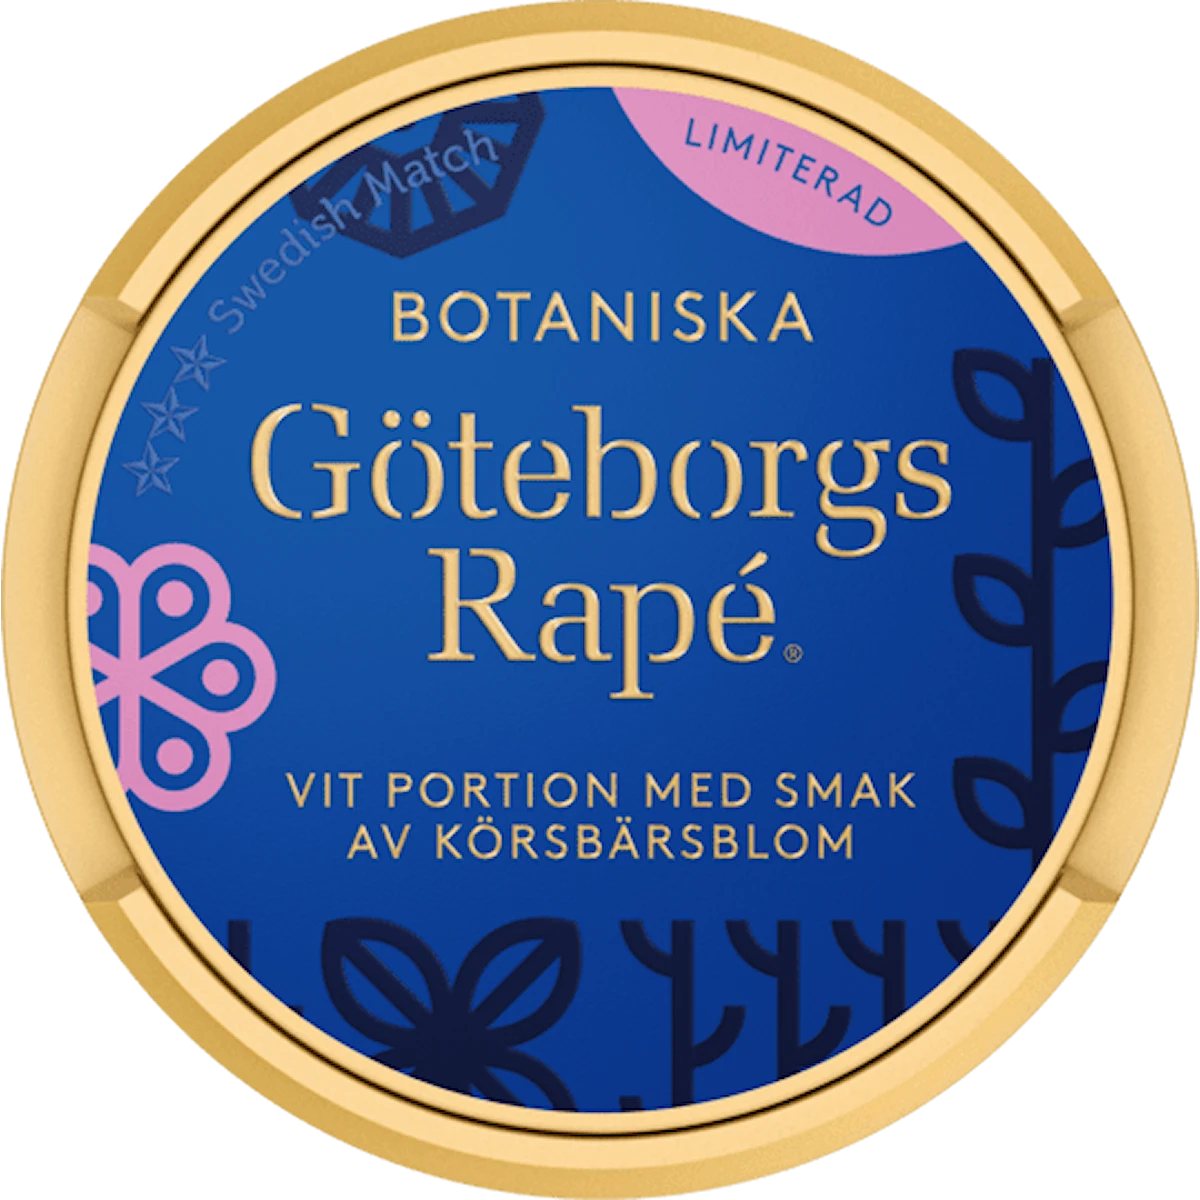 Göteborgs Rapé Botaniska White Portion